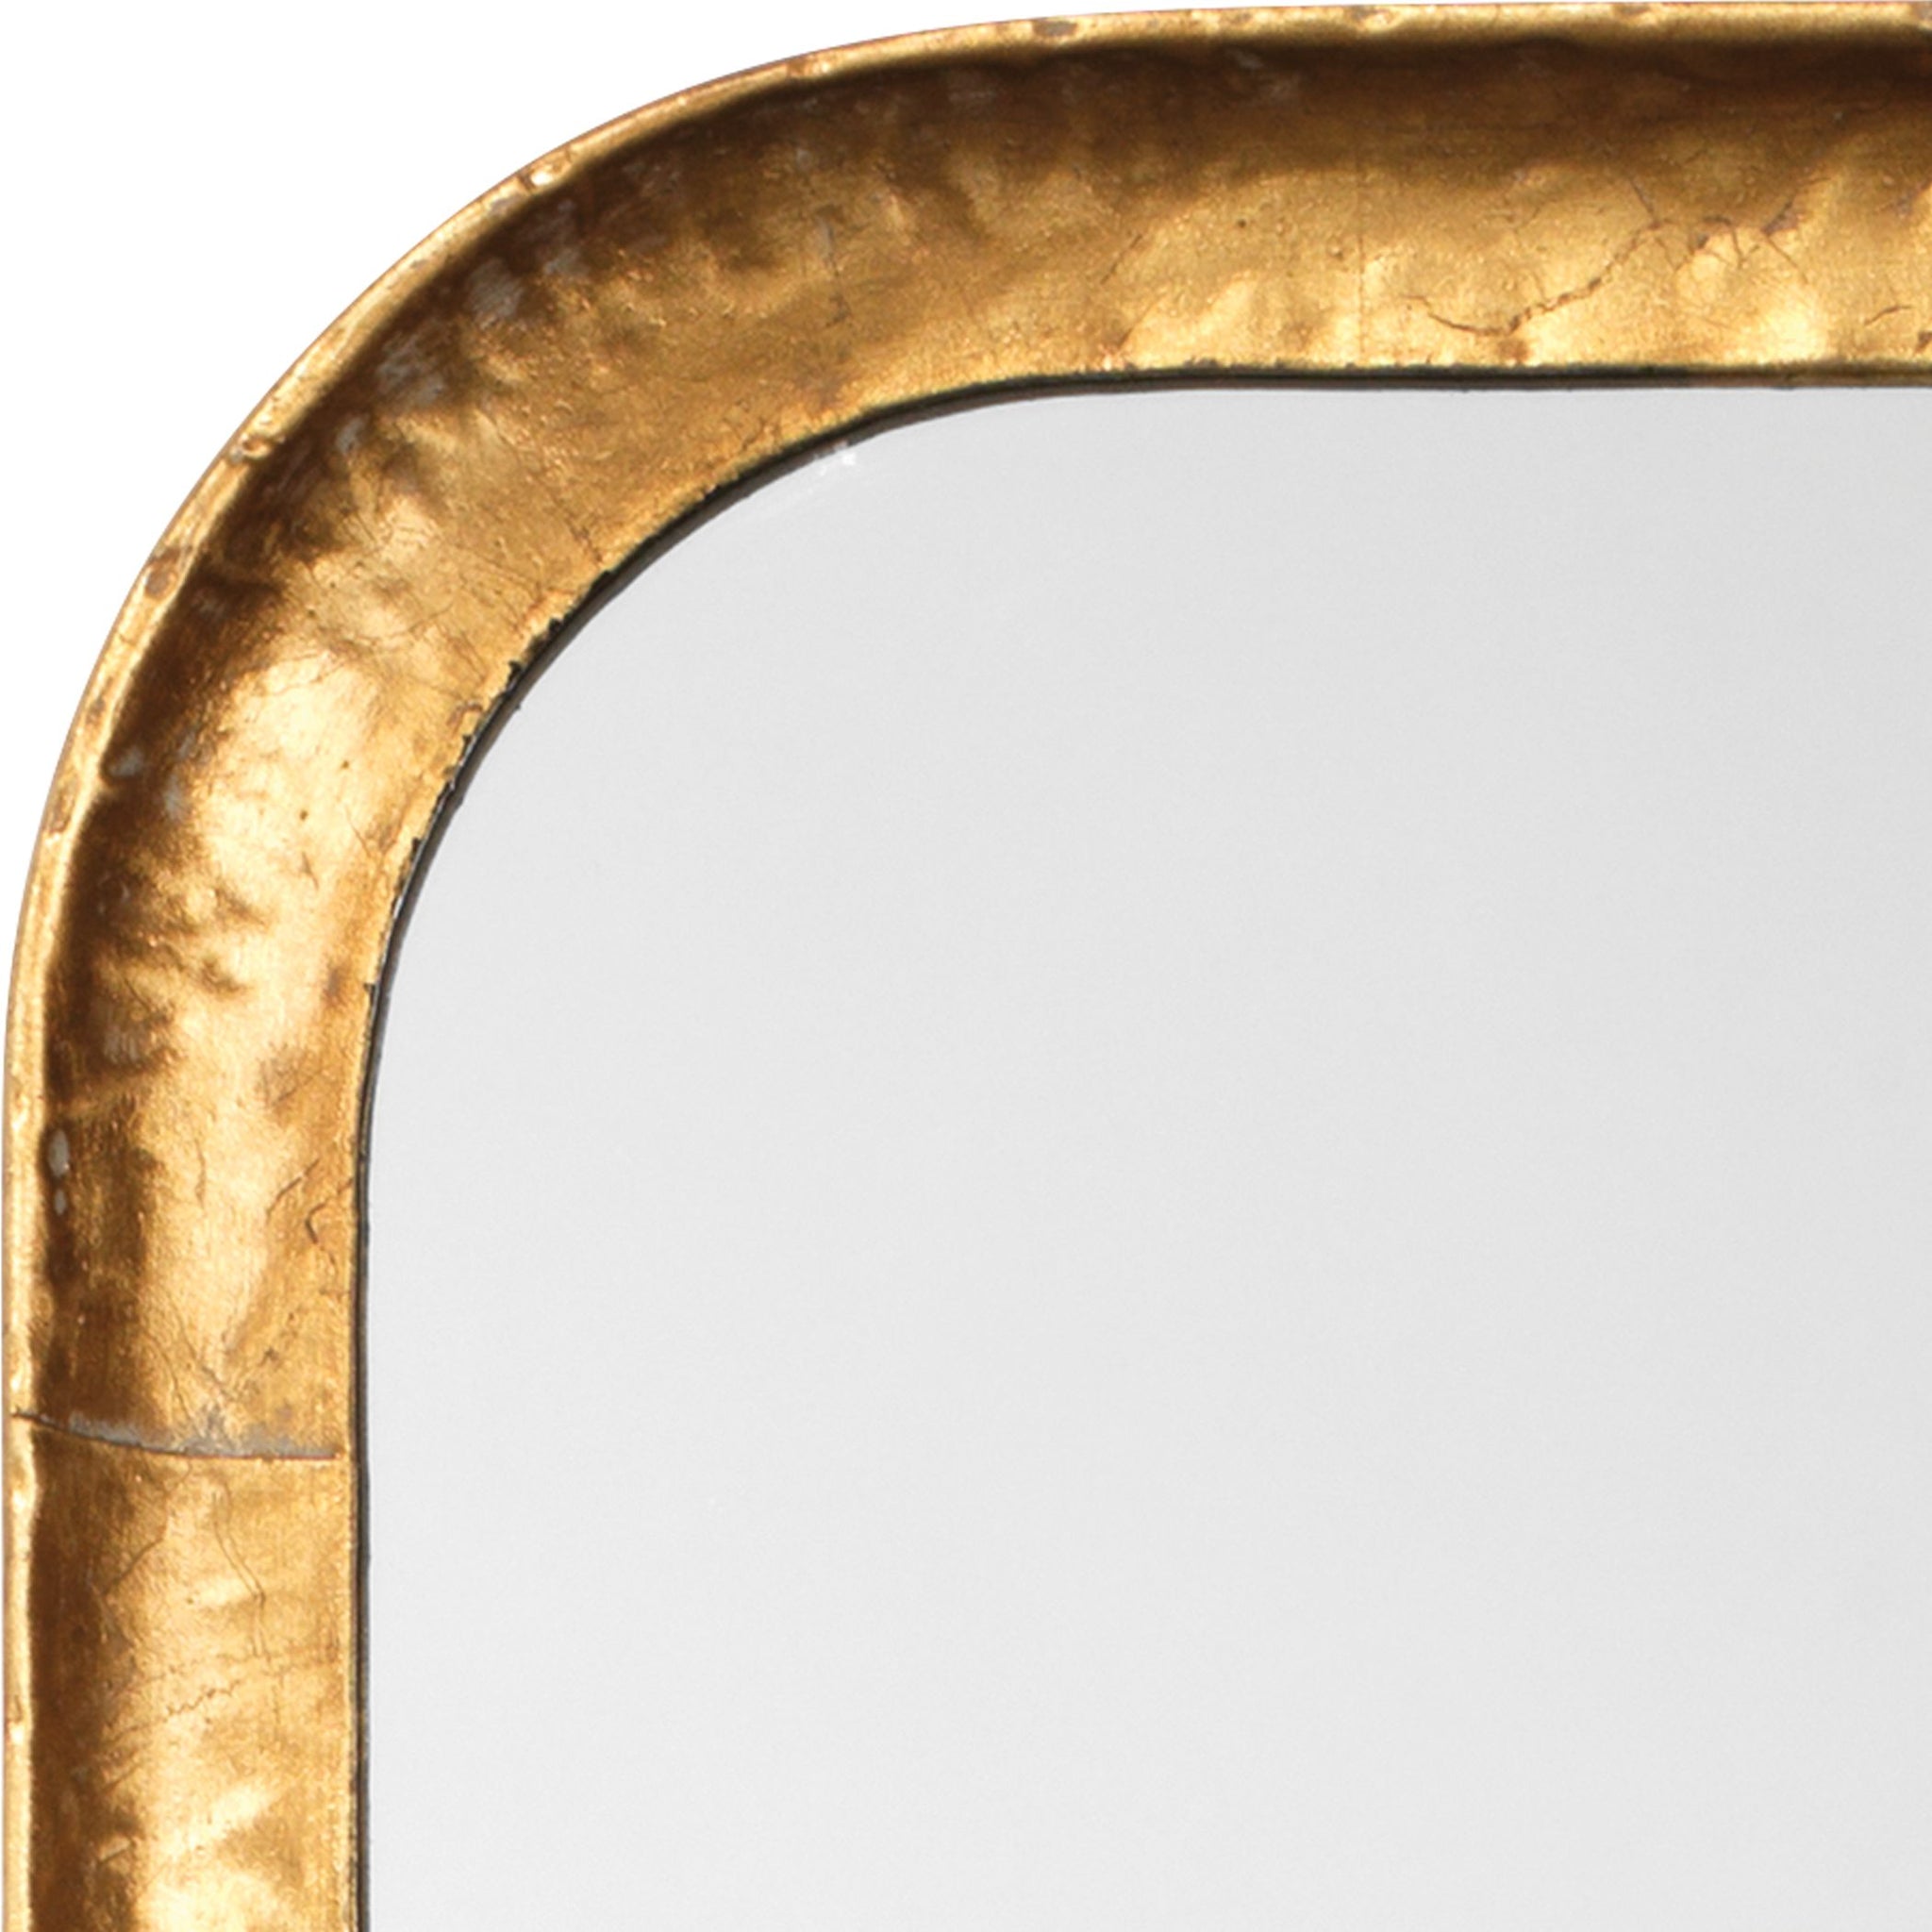 Capital Iron Mirror, Gold Leaf